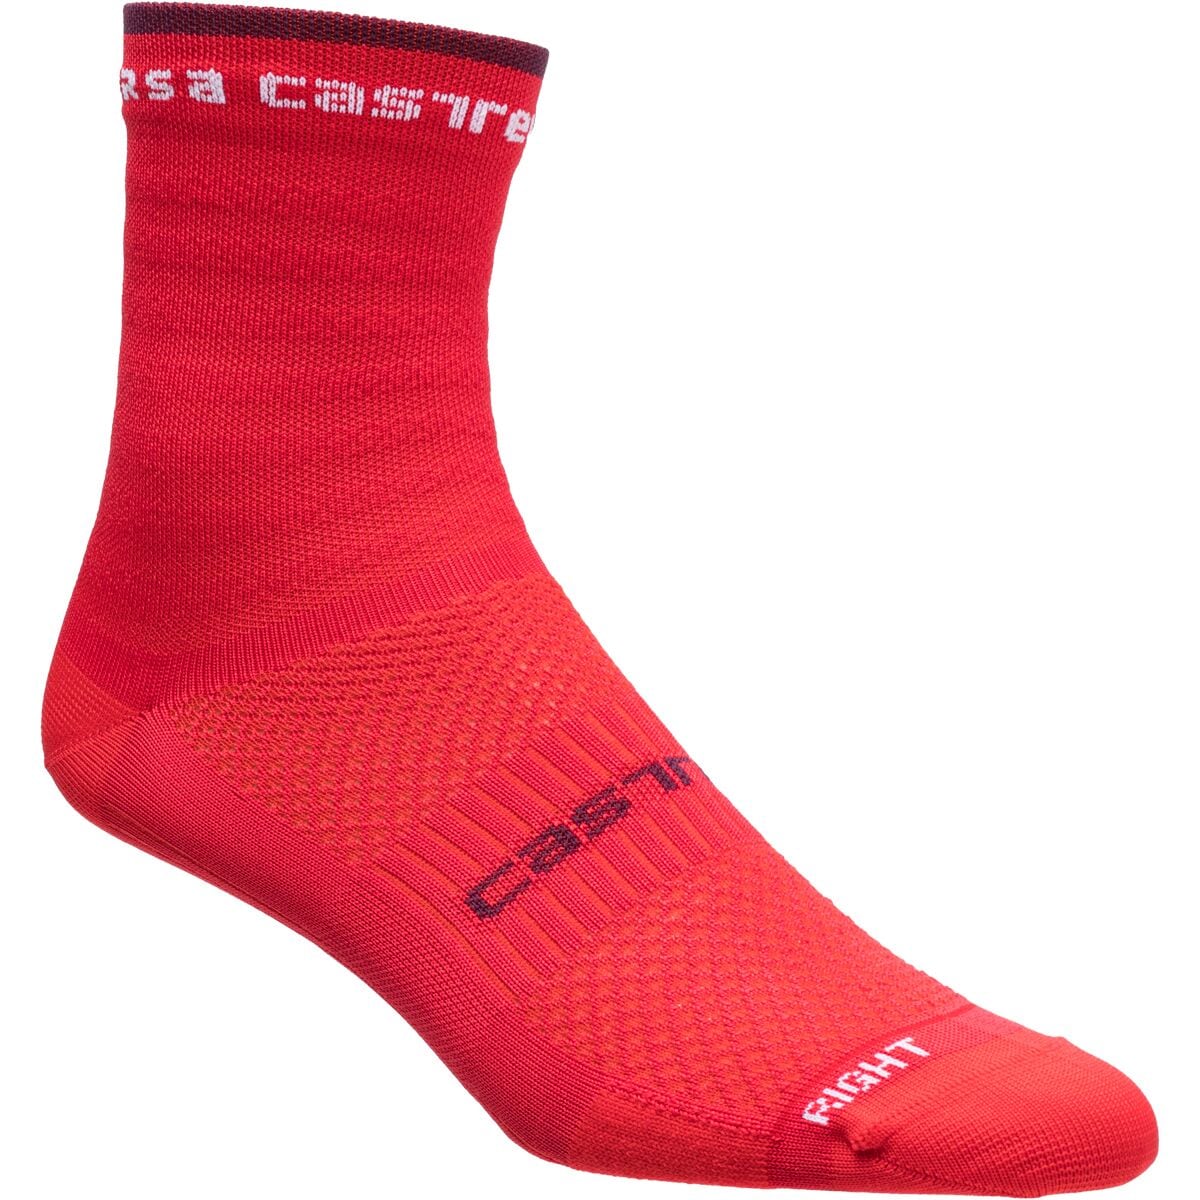 Castelli Rosso Corsa 11 Sock - Women's